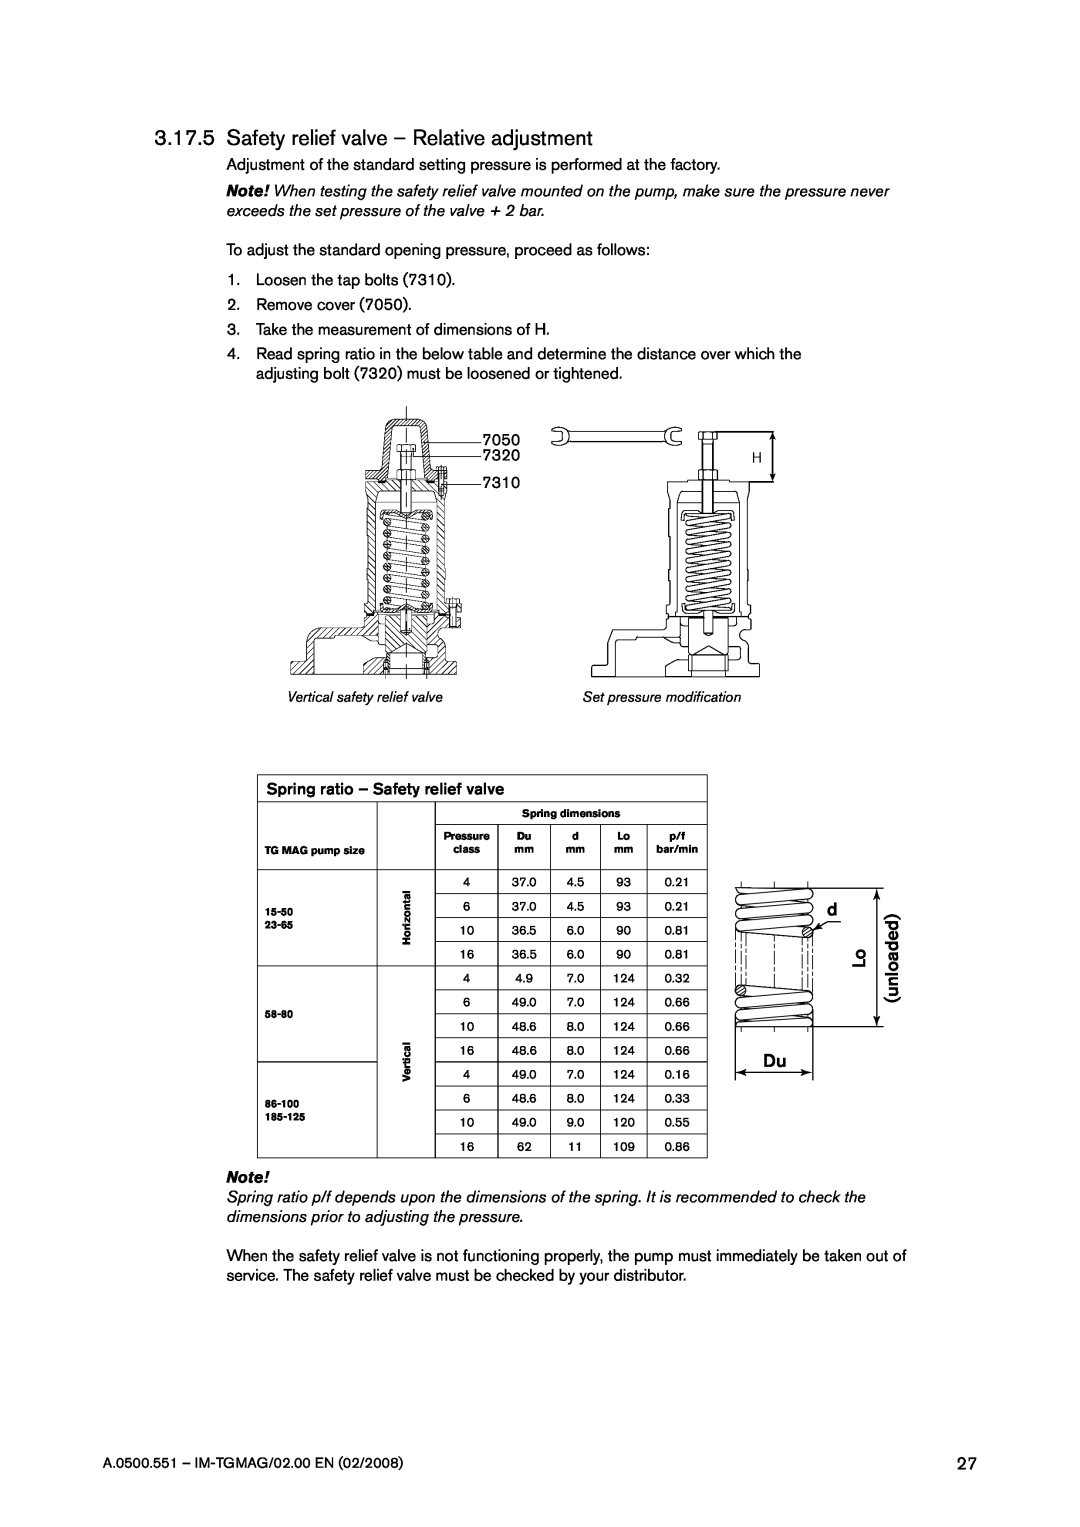 SPX Cooling Technologies TG MAG58-80, TG MAG185-125 Safety relief valve - Relative adjustment, d Lo Du, unloaded 